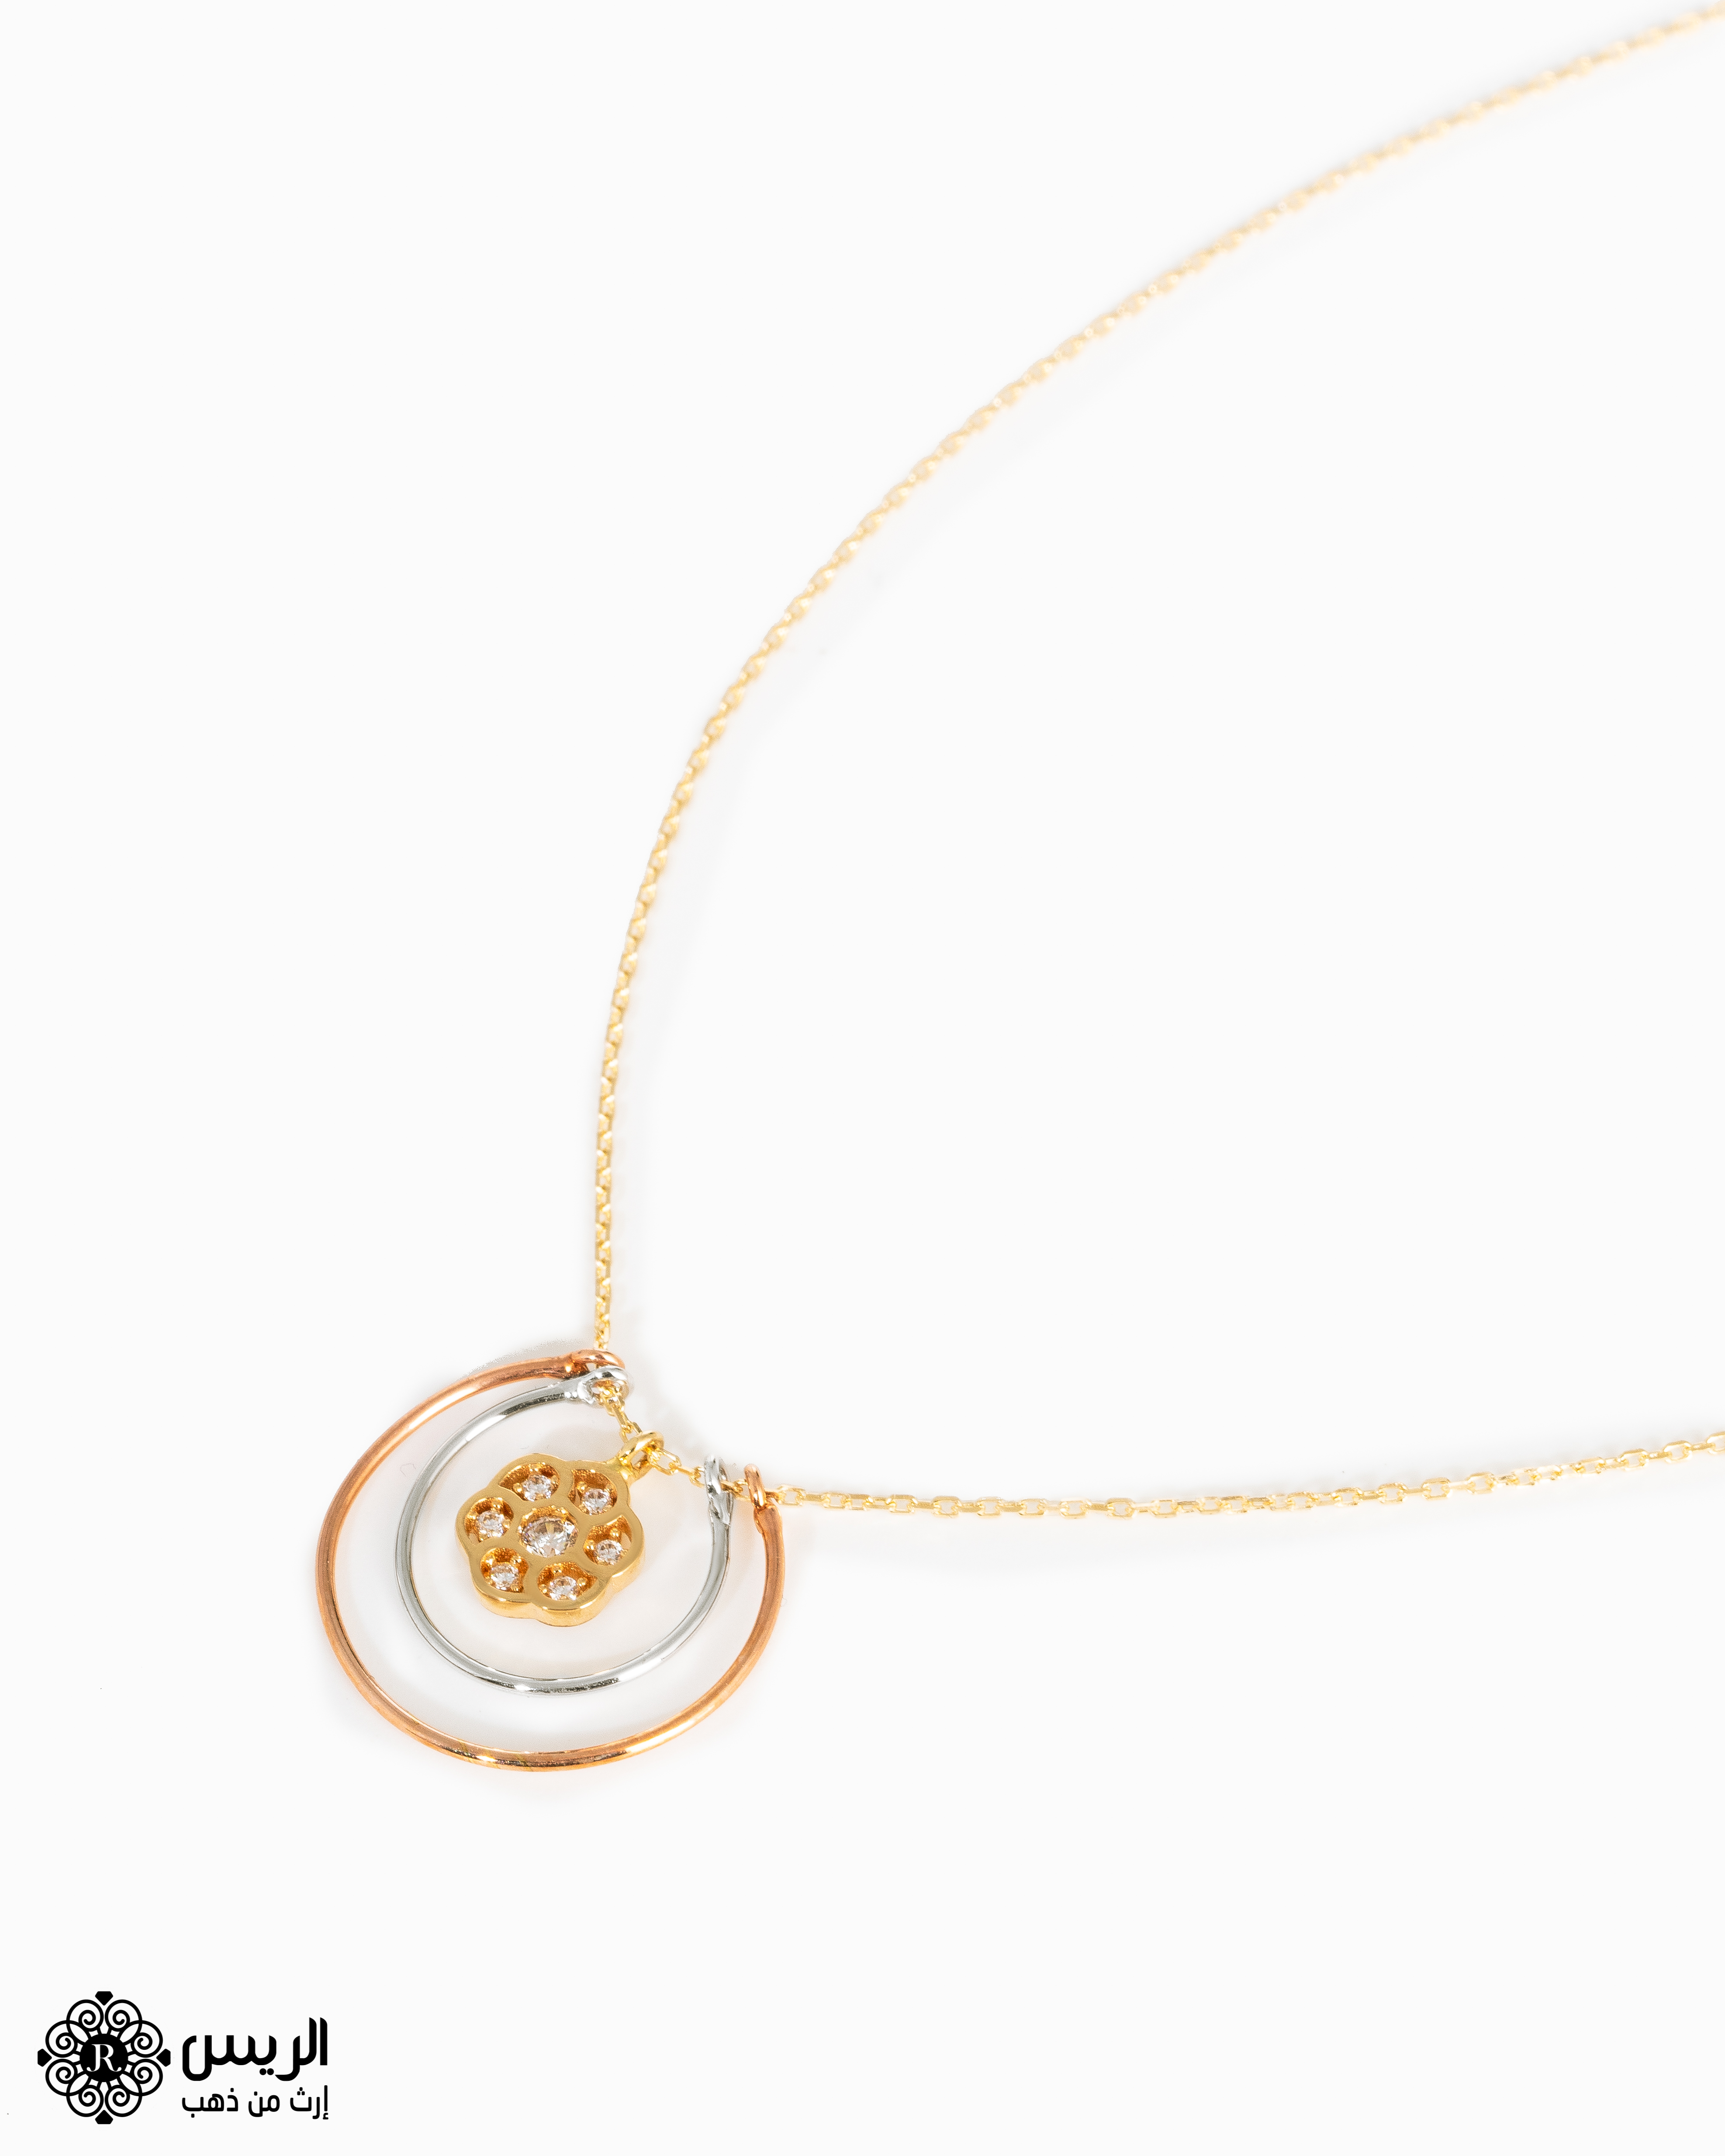 Raies jewelry Pendant with Chain Elegant تعليقة مع سلسلة ناعمة الريس للمجوهرات